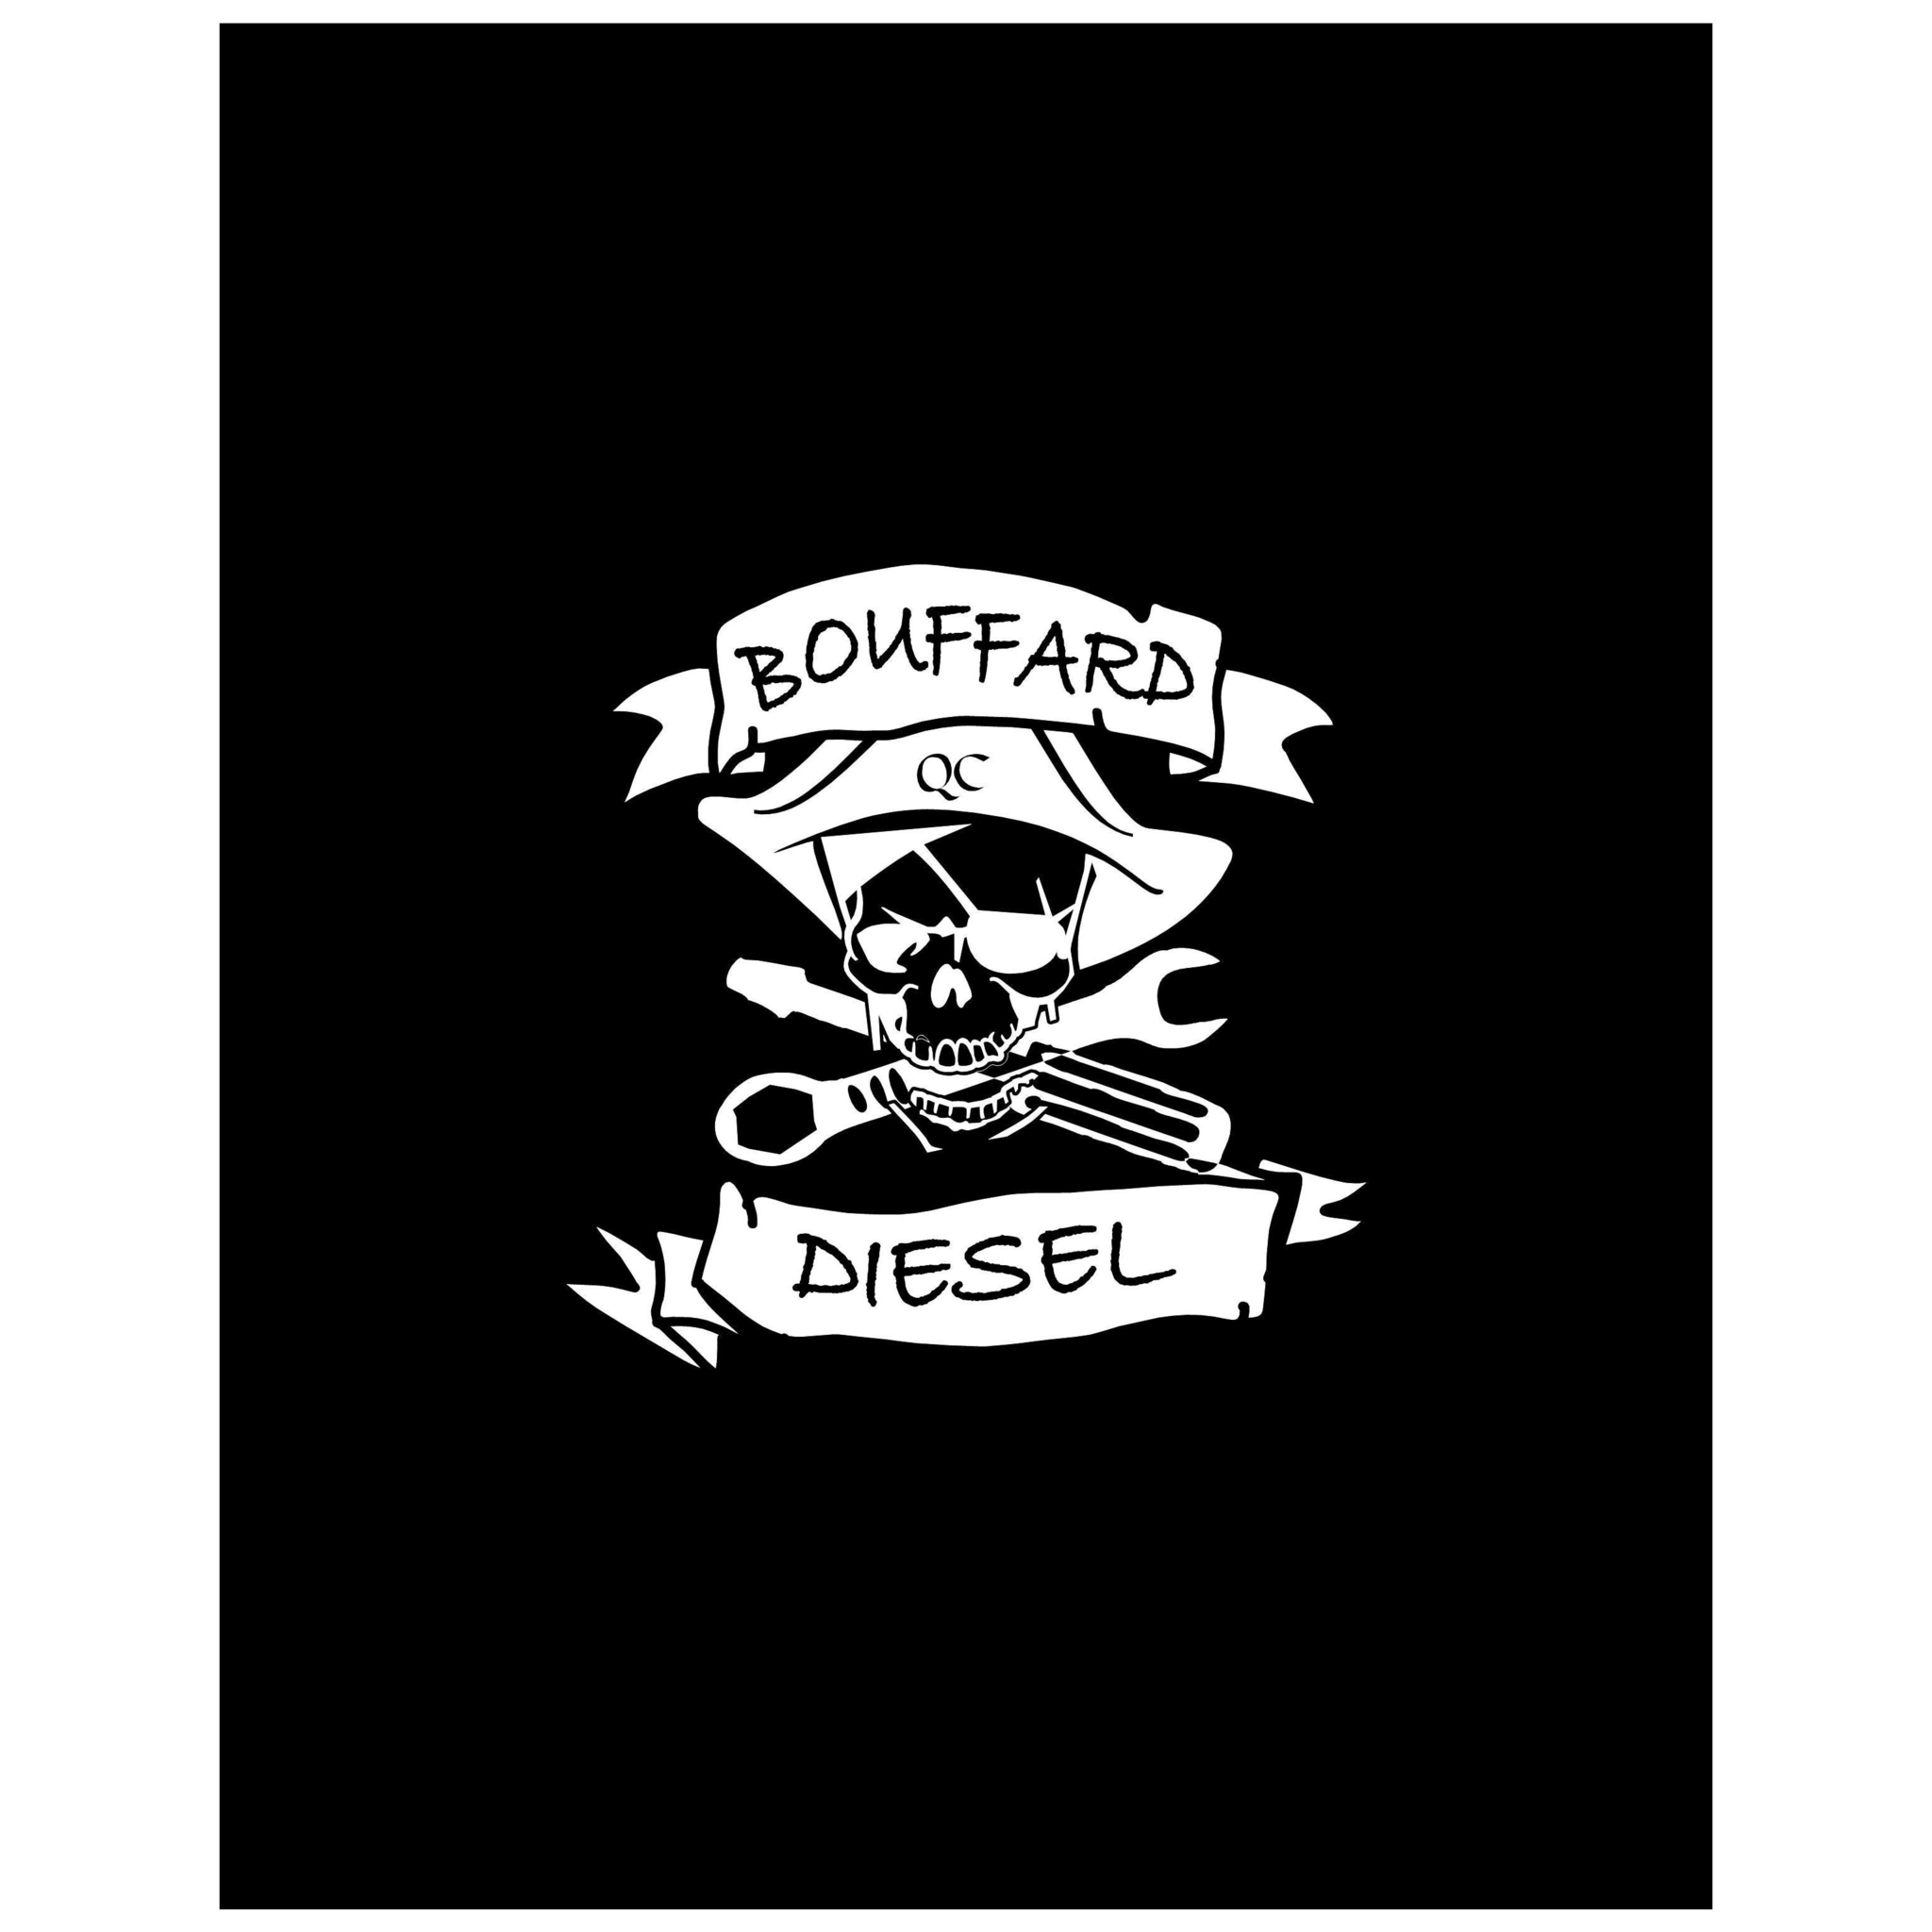 Bouffard Diesel - Car Repair & Service